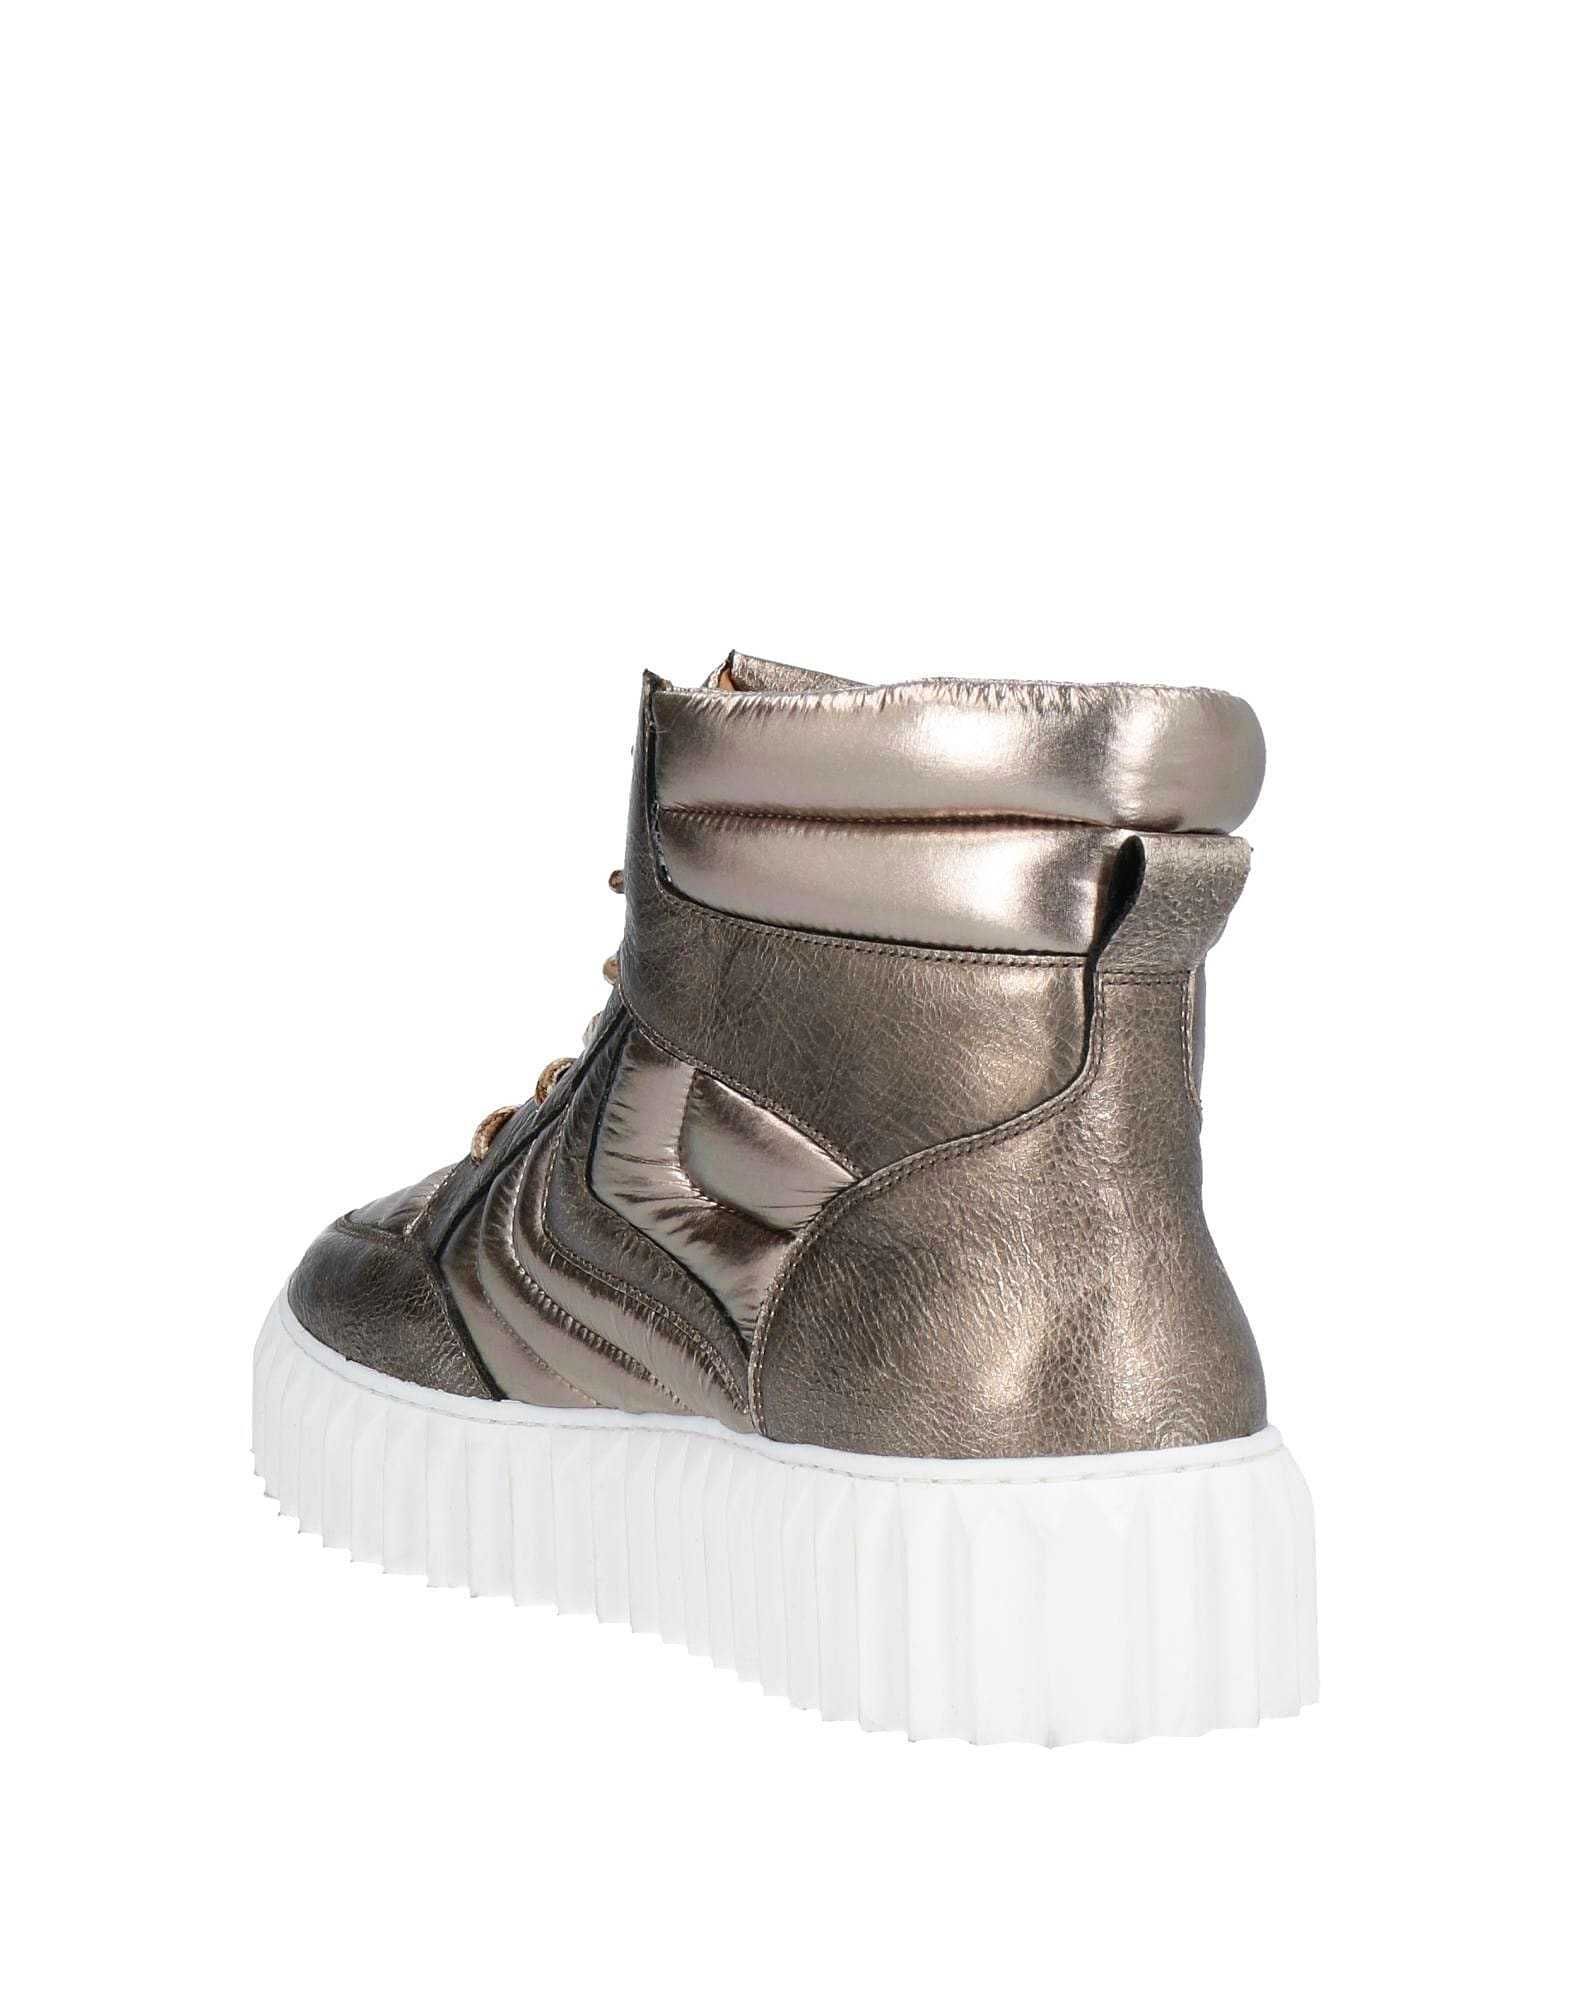 Sneakers piele premium Voile Blanche Italia - Bronz/Platina Mas. 37 EU